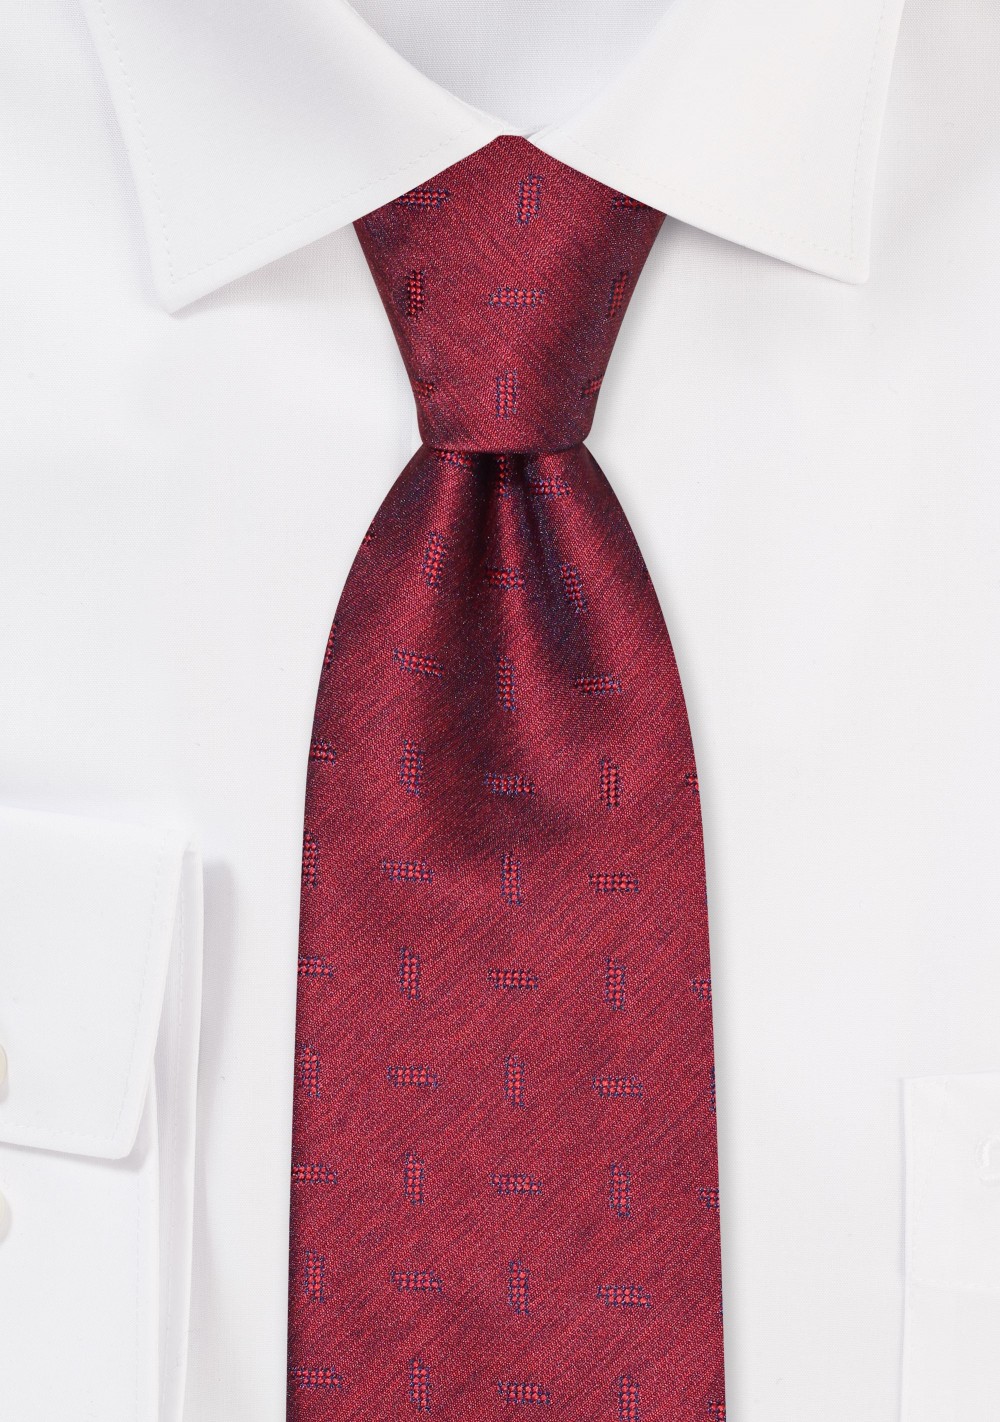 Matte Textured Tie in Deep Reds